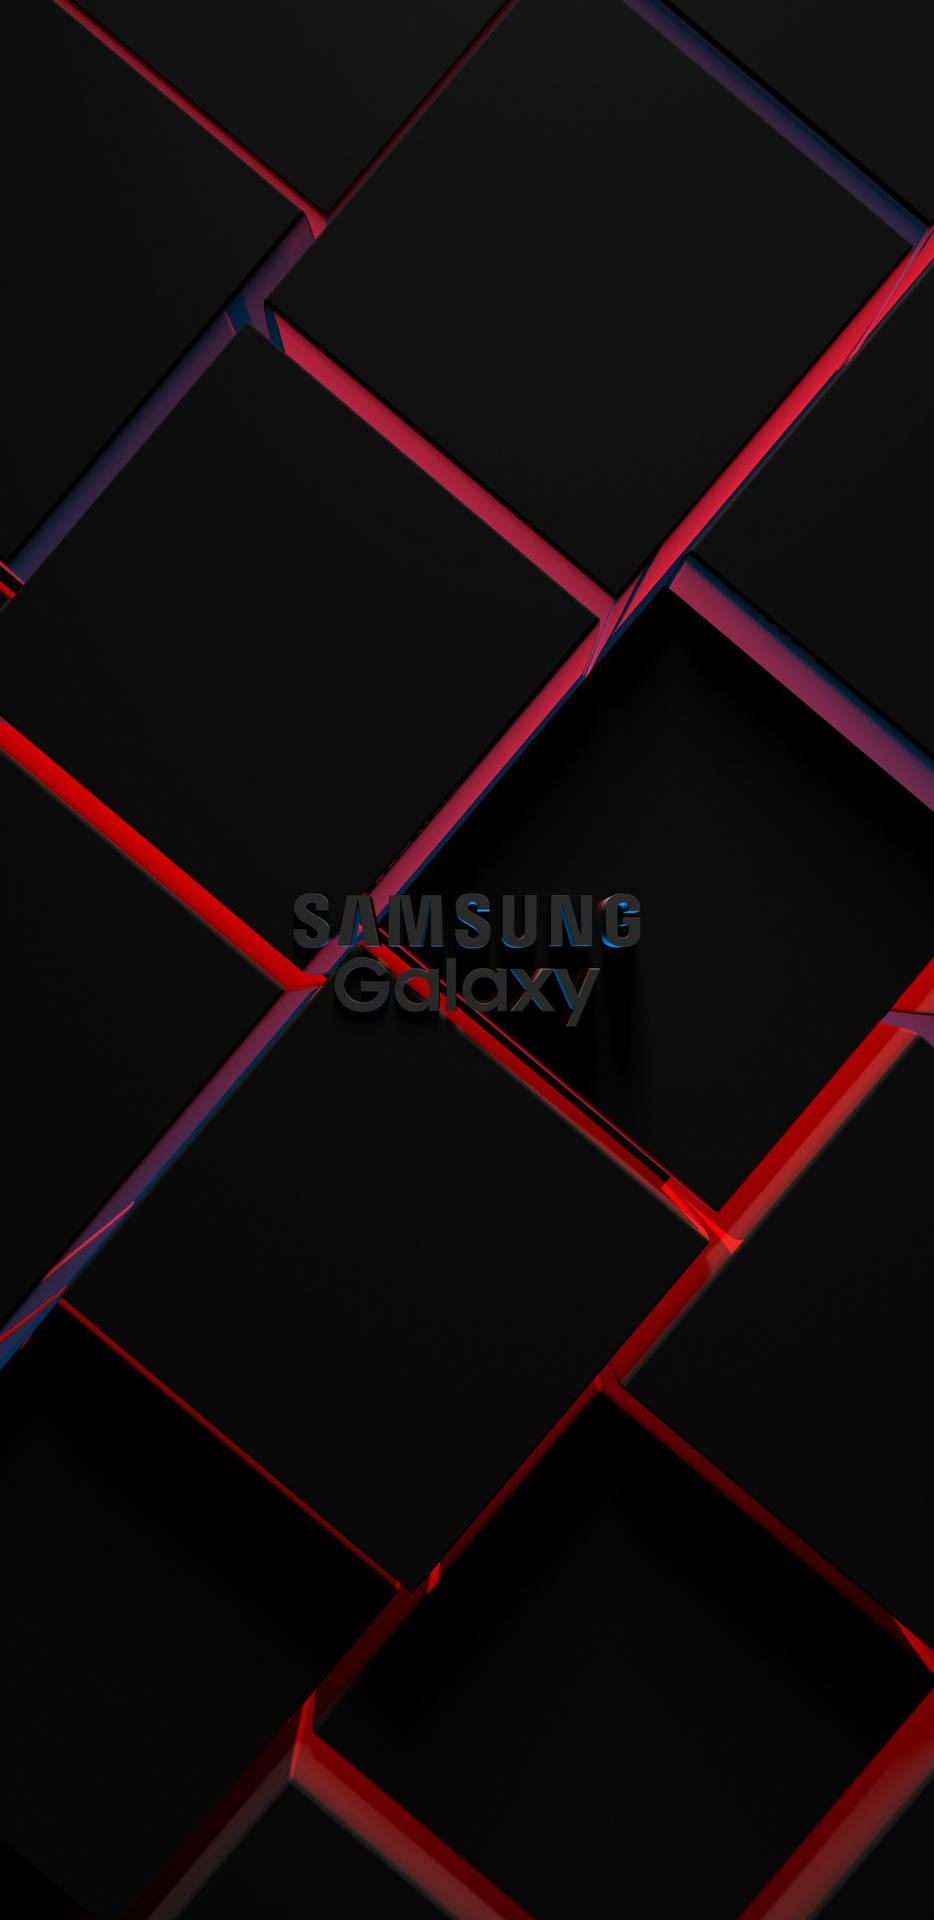 Samsung Galaxy Rød Og Sort Wallpaper